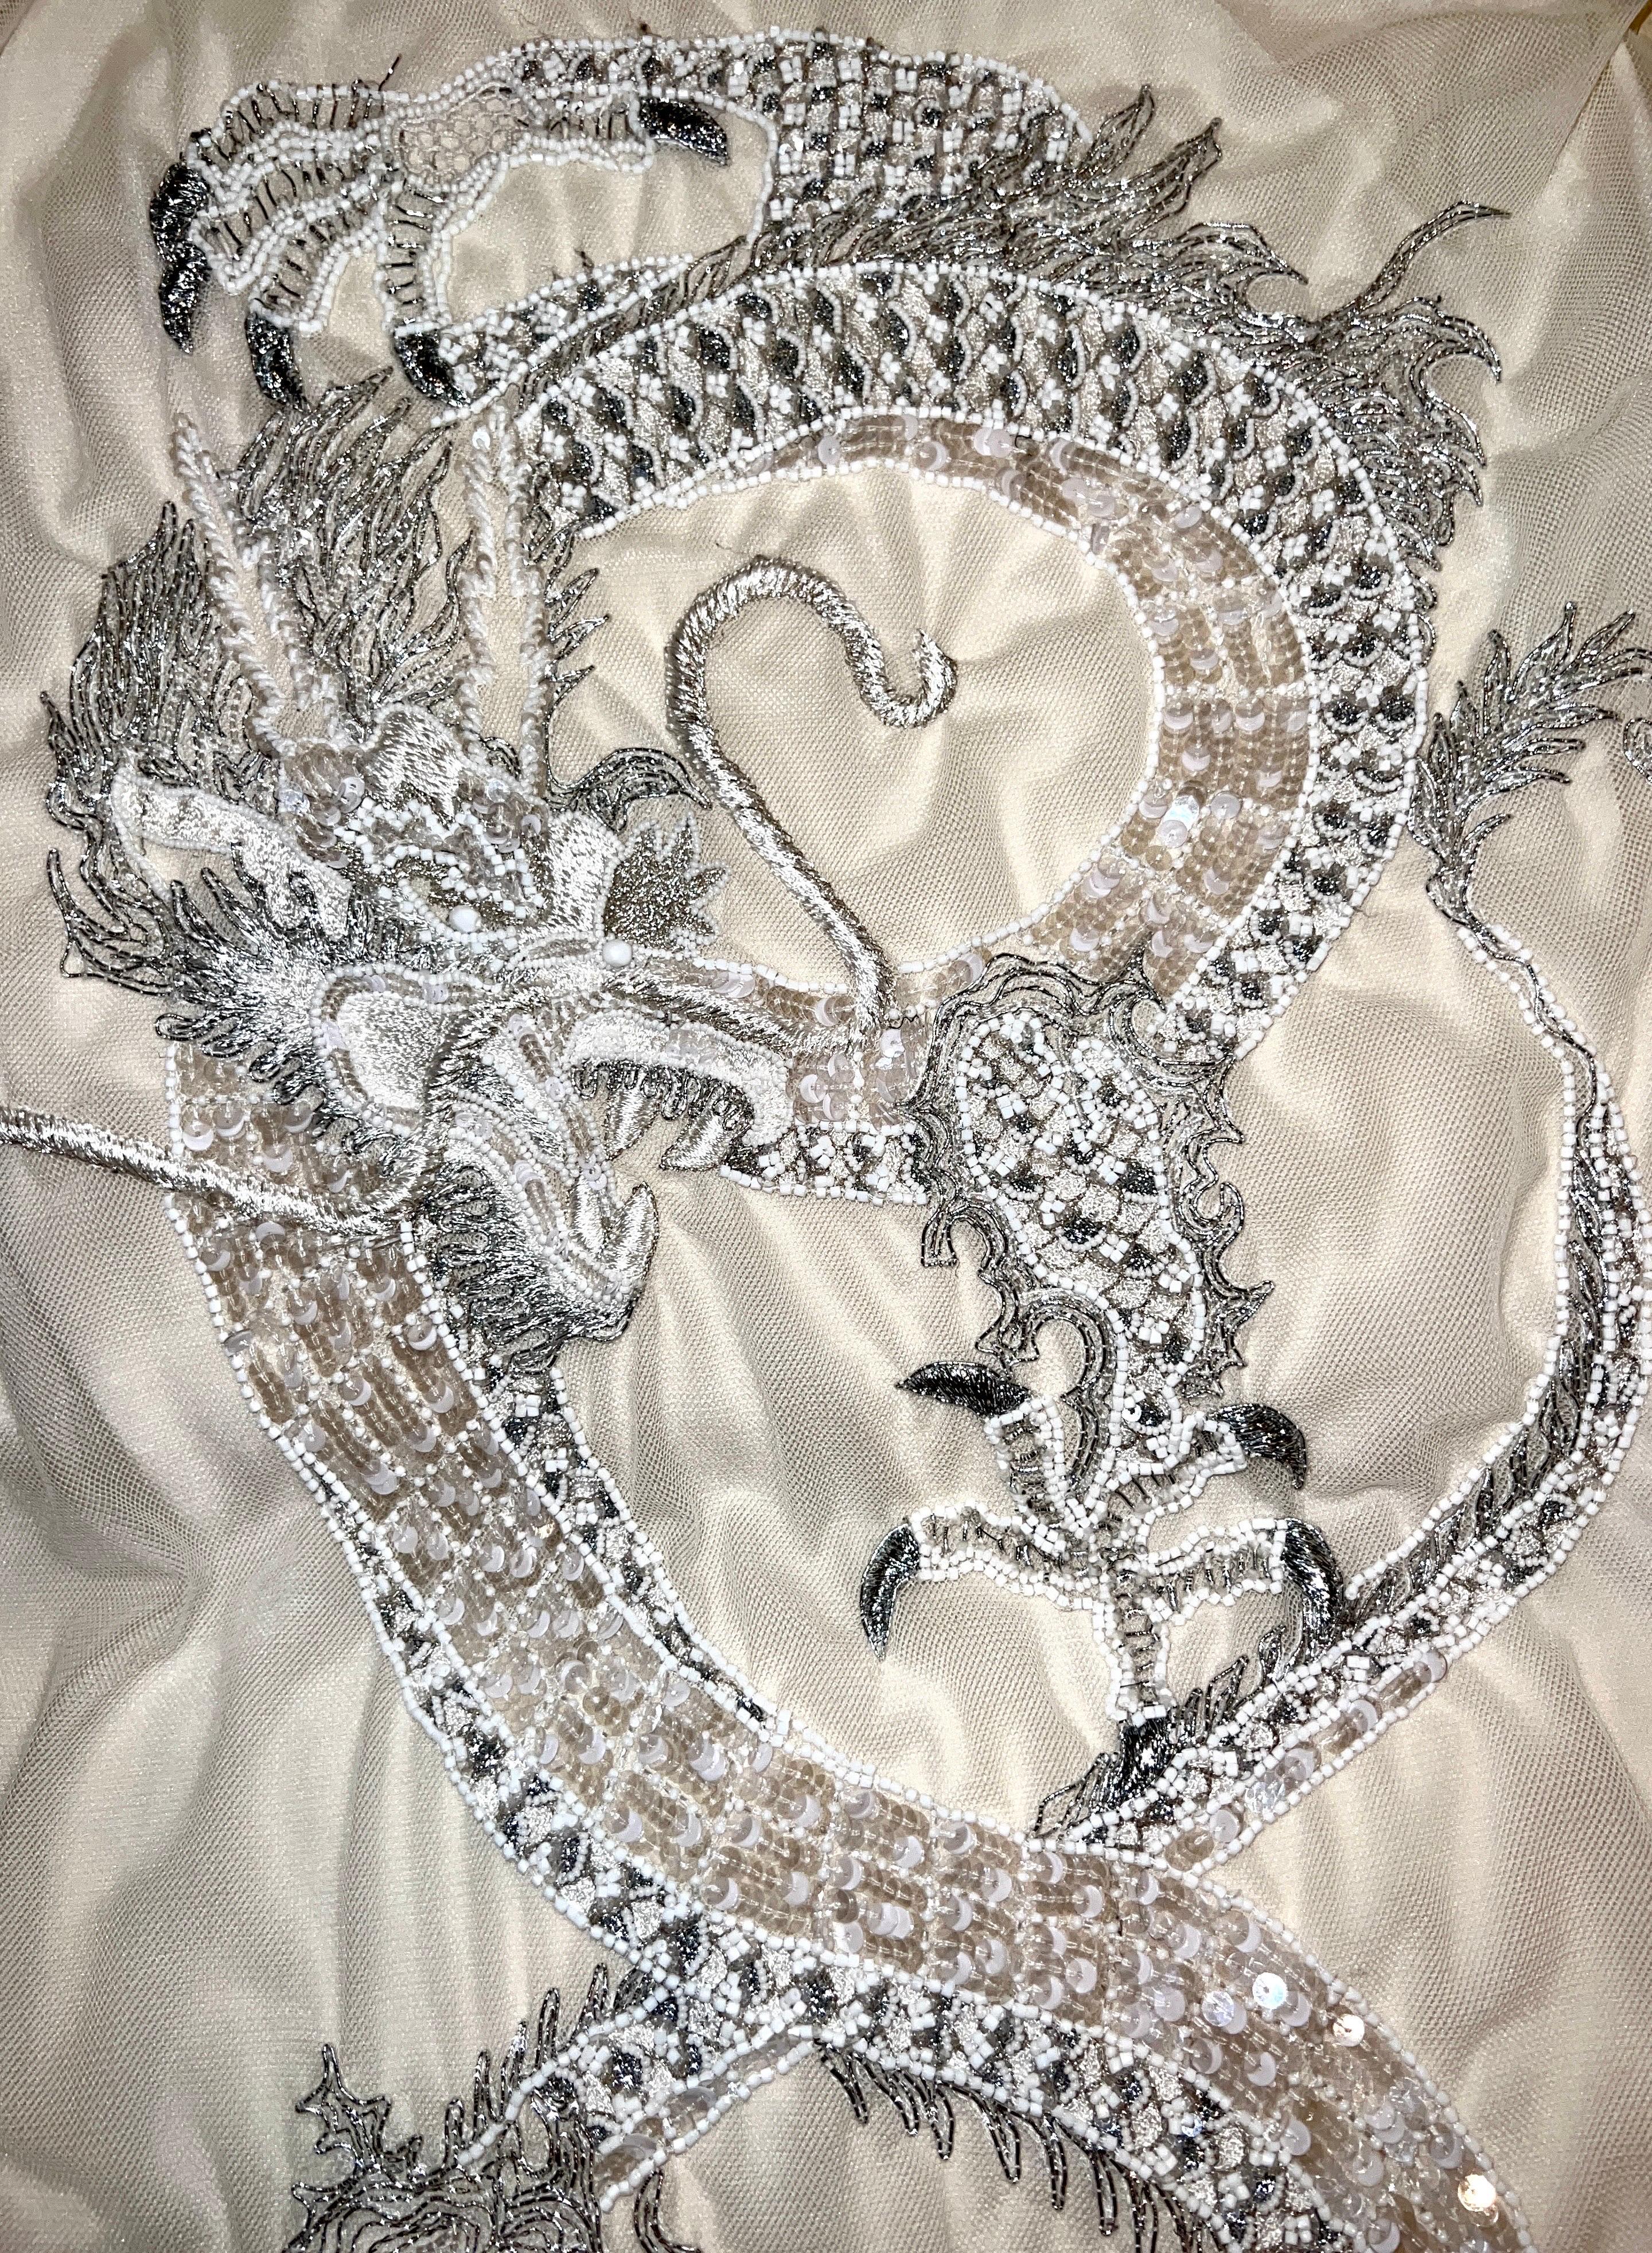 UNWORN Emilio Pucci Peter Dundas Dragon Embroidery Overlay Silk Dress Bridal 40 For Sale 4